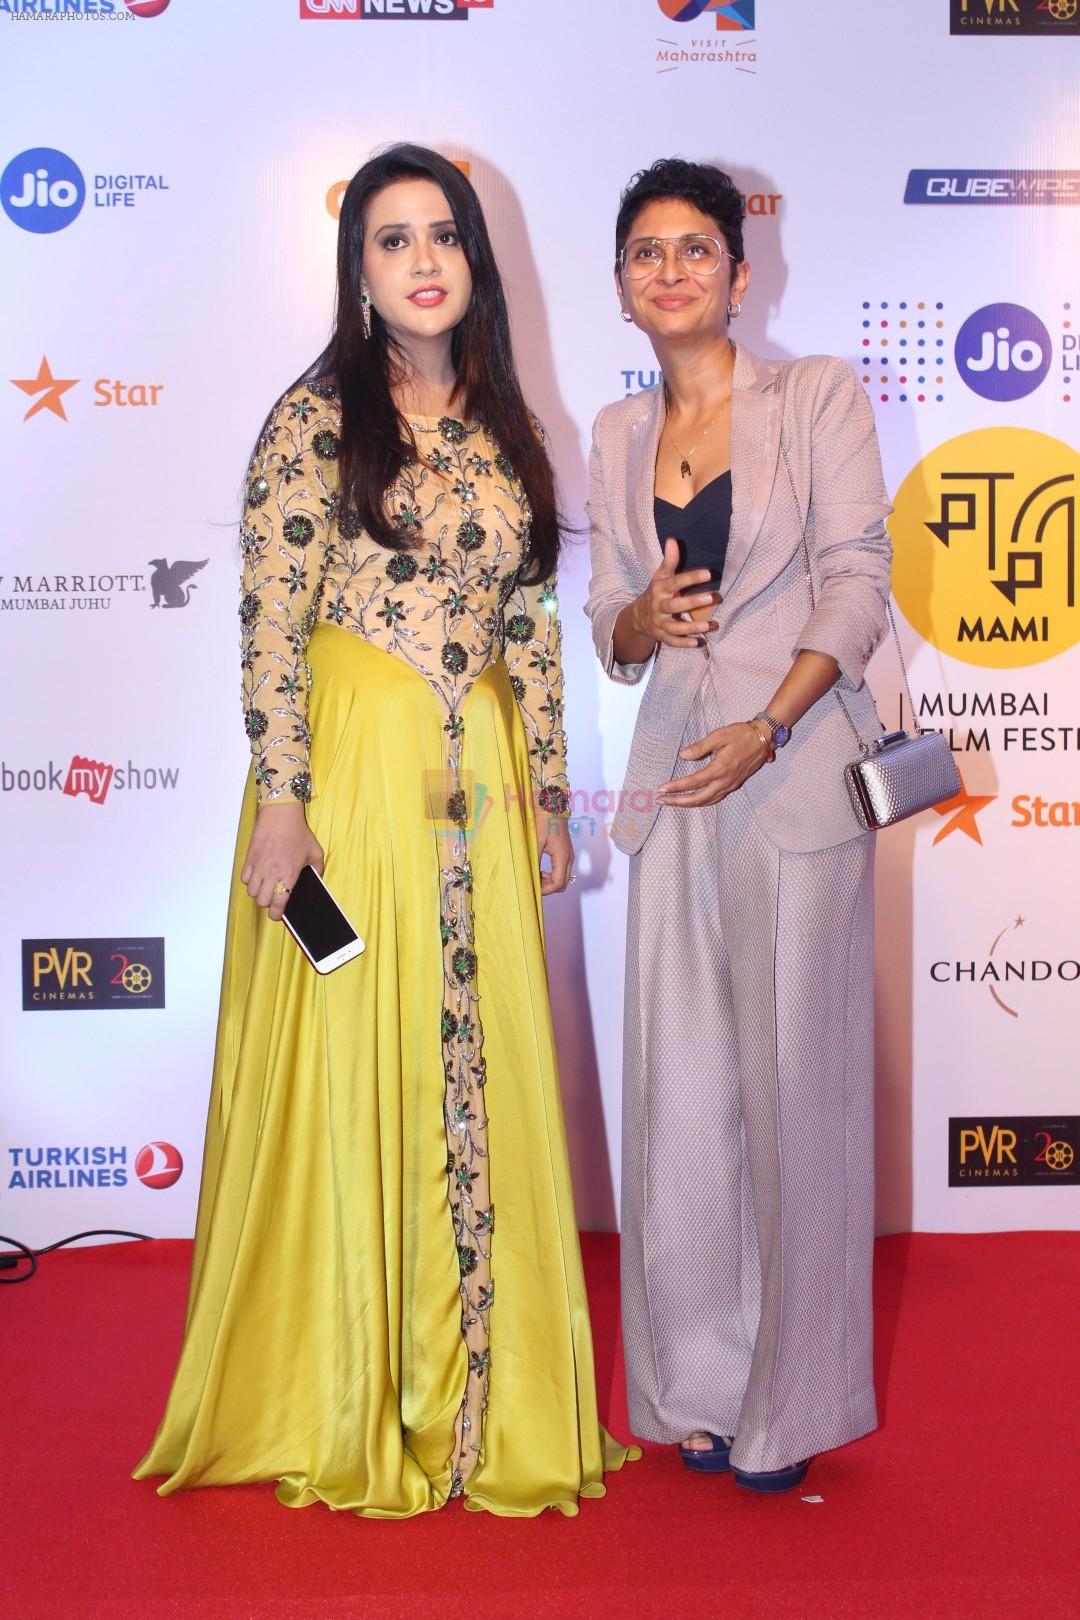 Kiran Rao at Mami Movie Mela 2017 on 12th Oct 2017